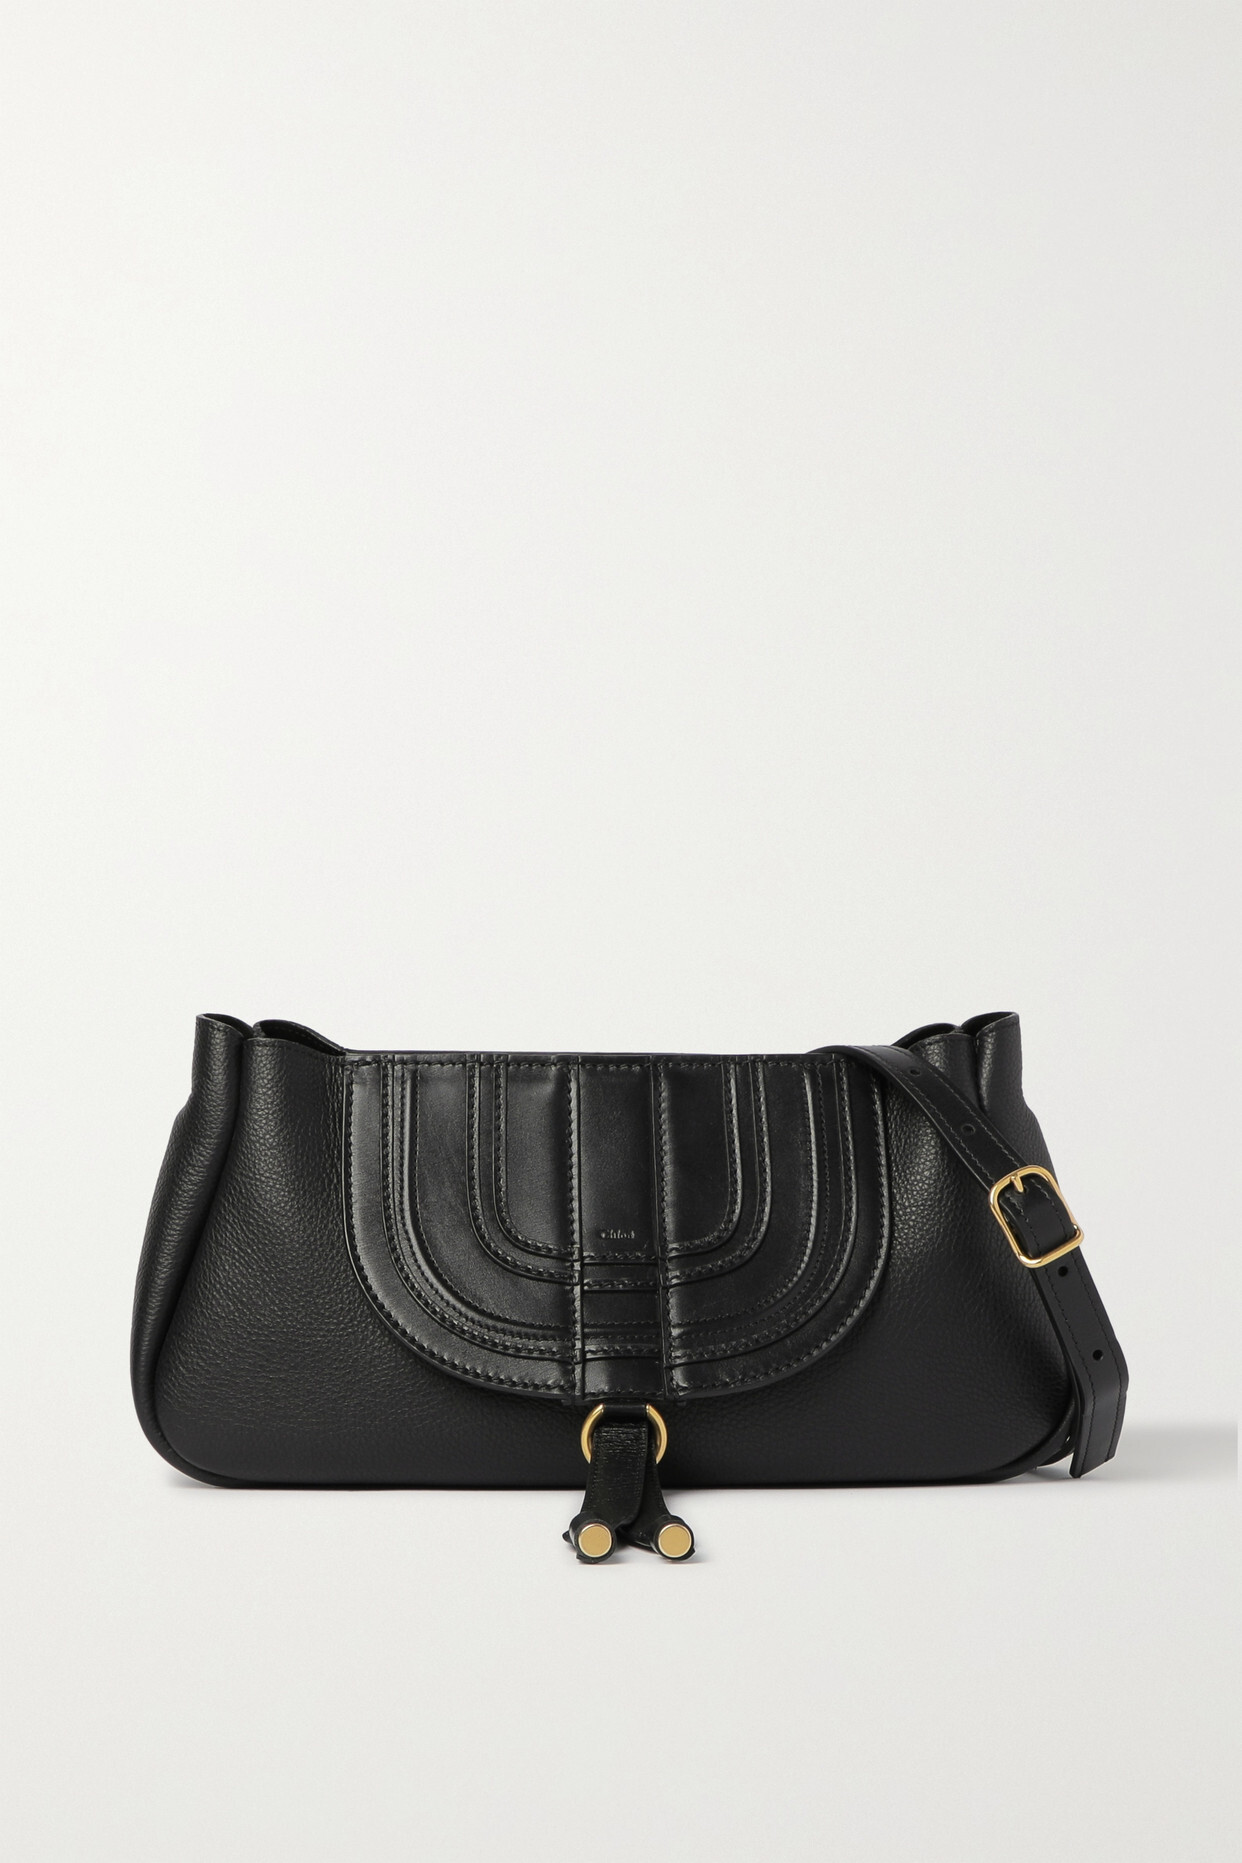 Chloé Chloé - Marcie Tasseled Textured-leather Shoulder Bag - Black